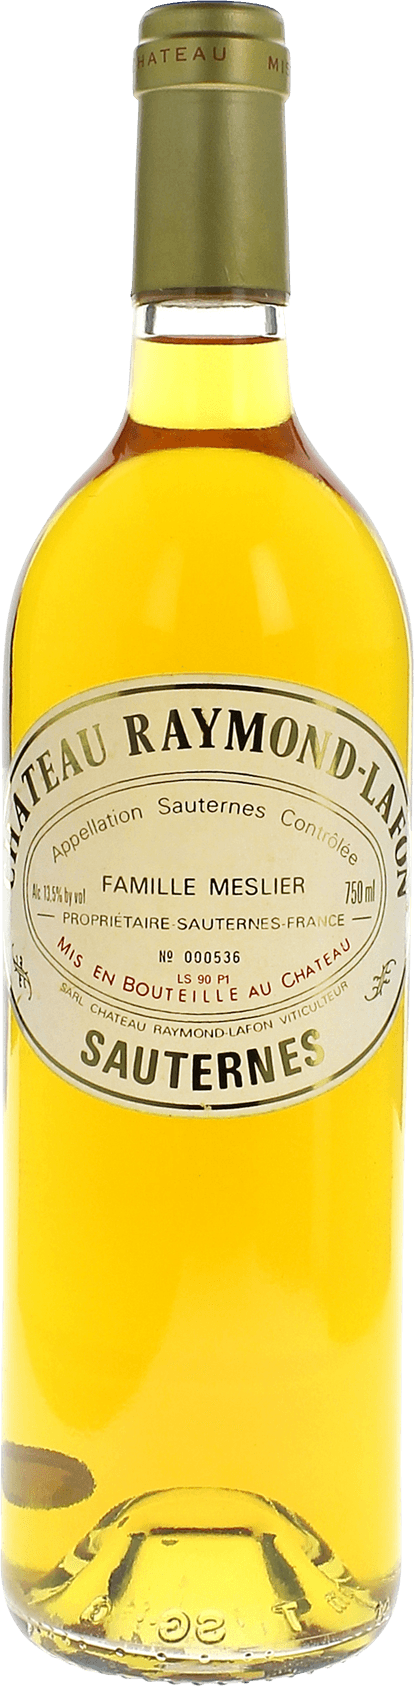 Raymon-lafon 1988  SAUTERNES, BORDEAUX